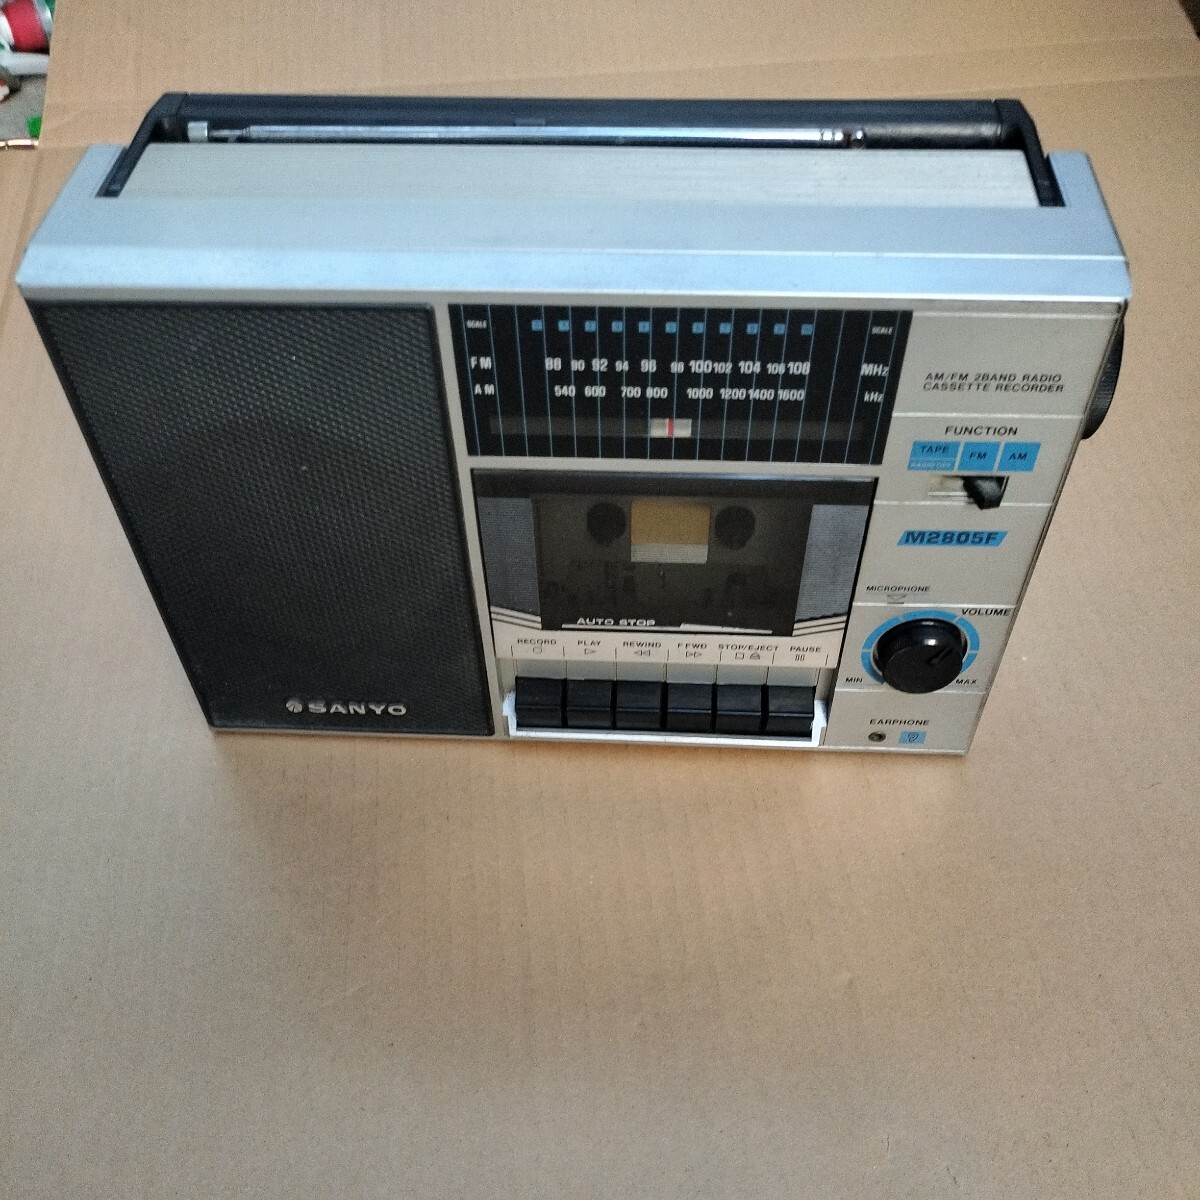  Showa Retro SANYO M2805F radio radio-cassette 60508-10